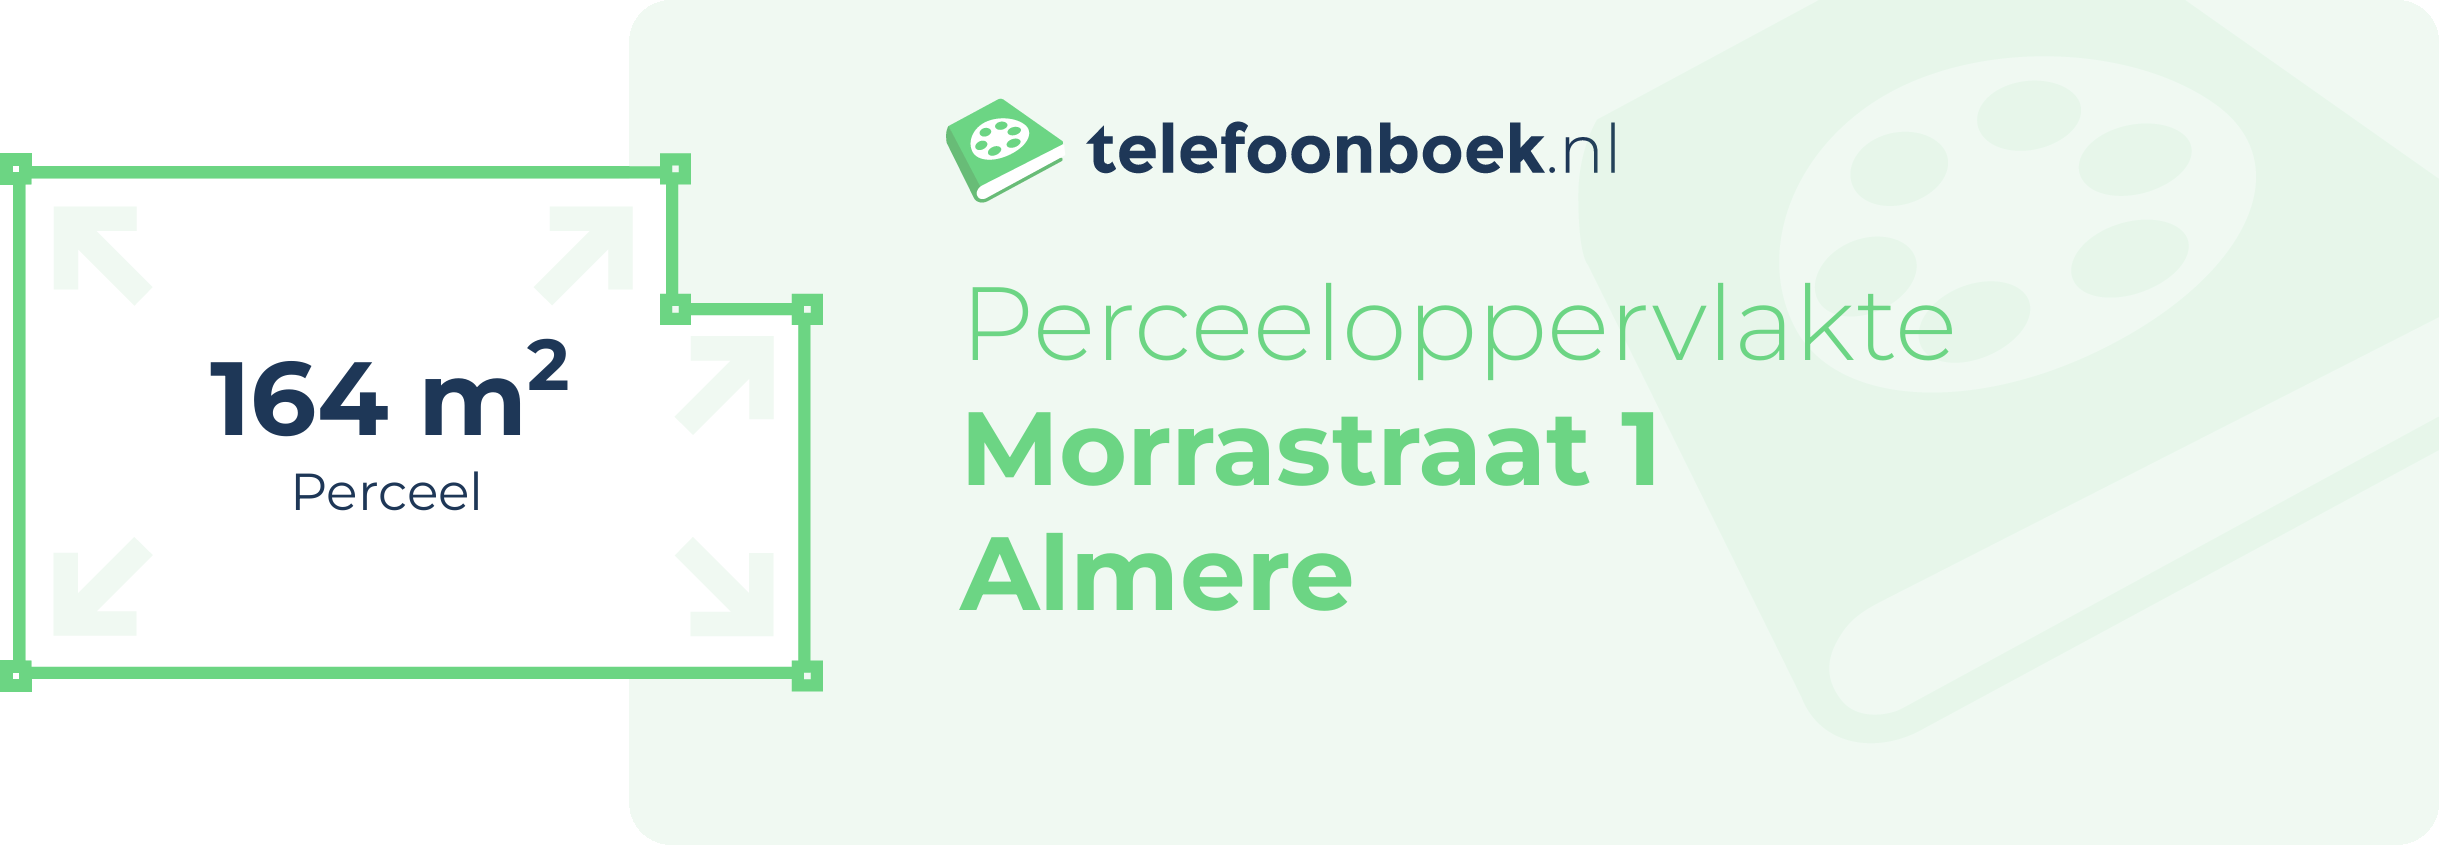 Perceeloppervlakte Morrastraat 1 Almere